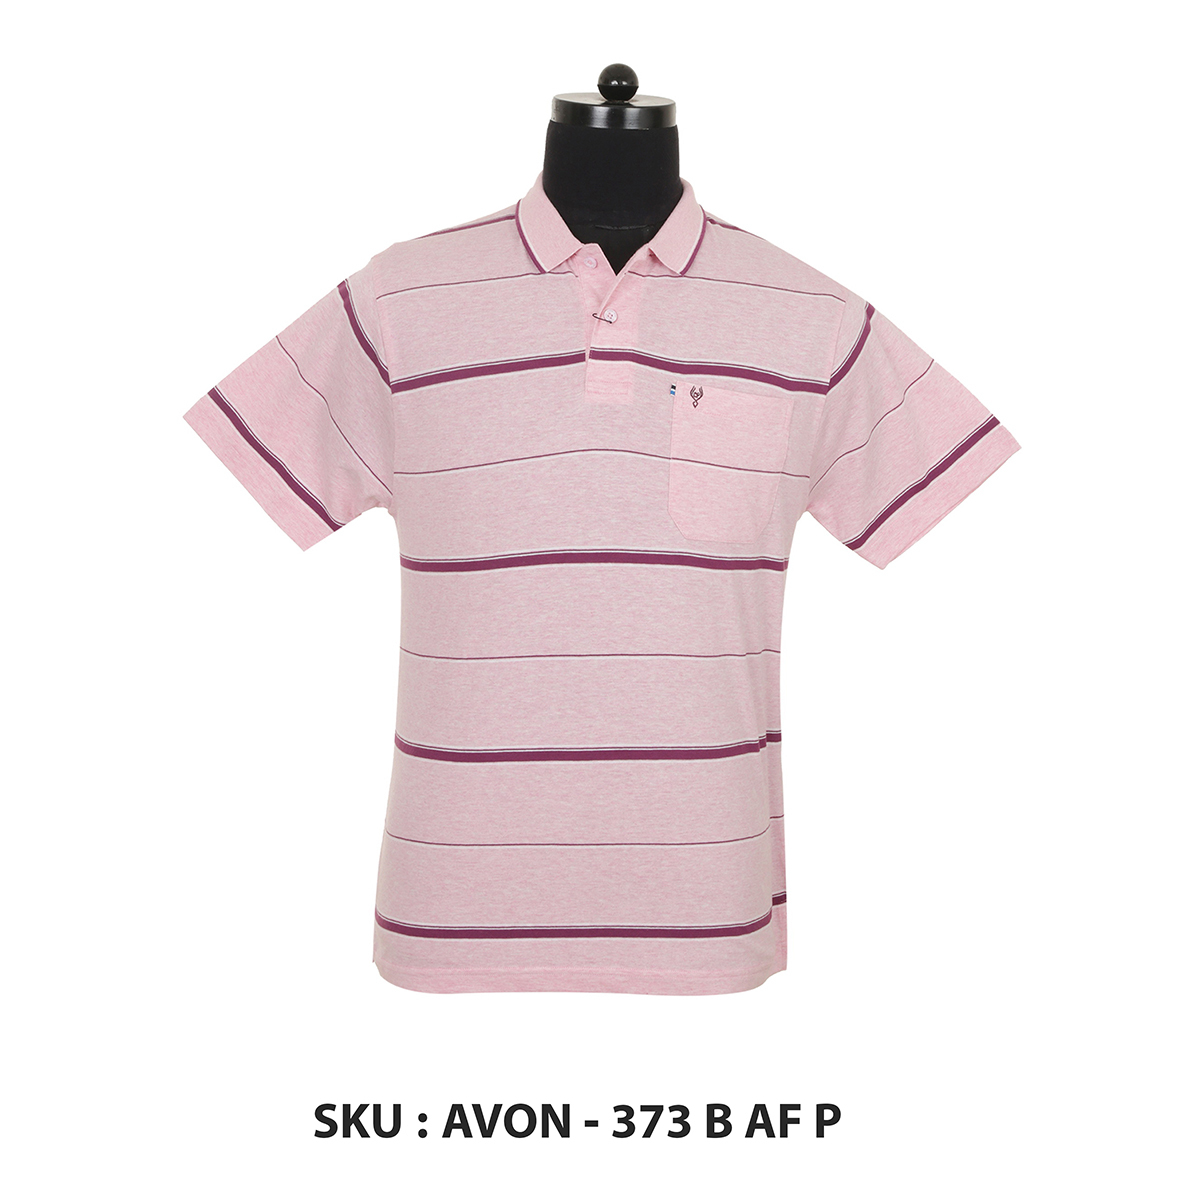 Classic Polo Mens T Shirt Avon - 373 B Af P Pink L